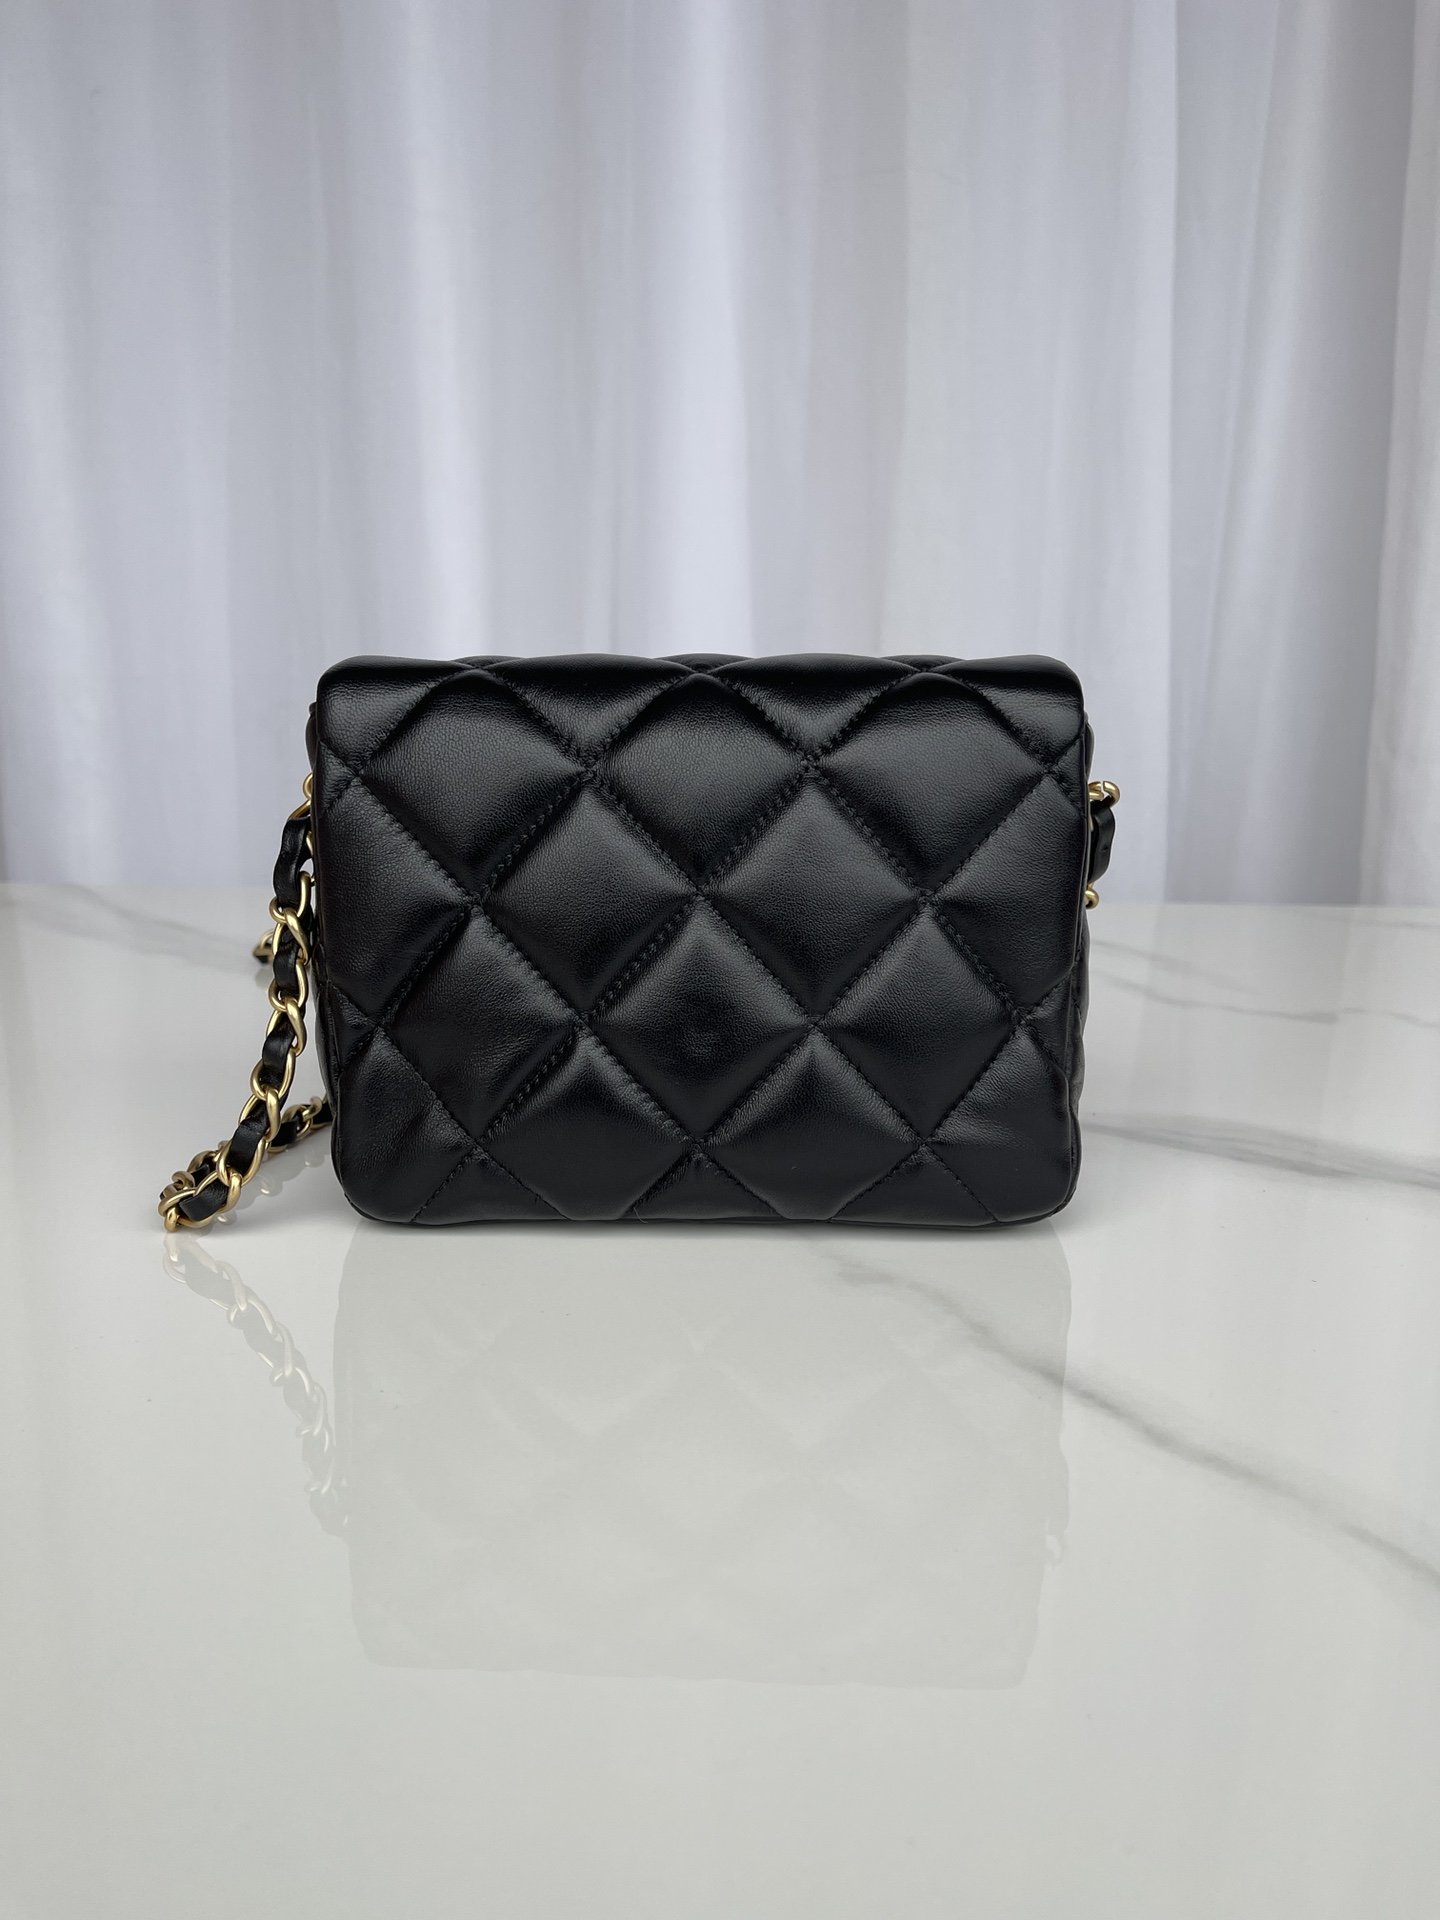 A bag Mini Flap Bag AS3979 18 cm, black фото 3